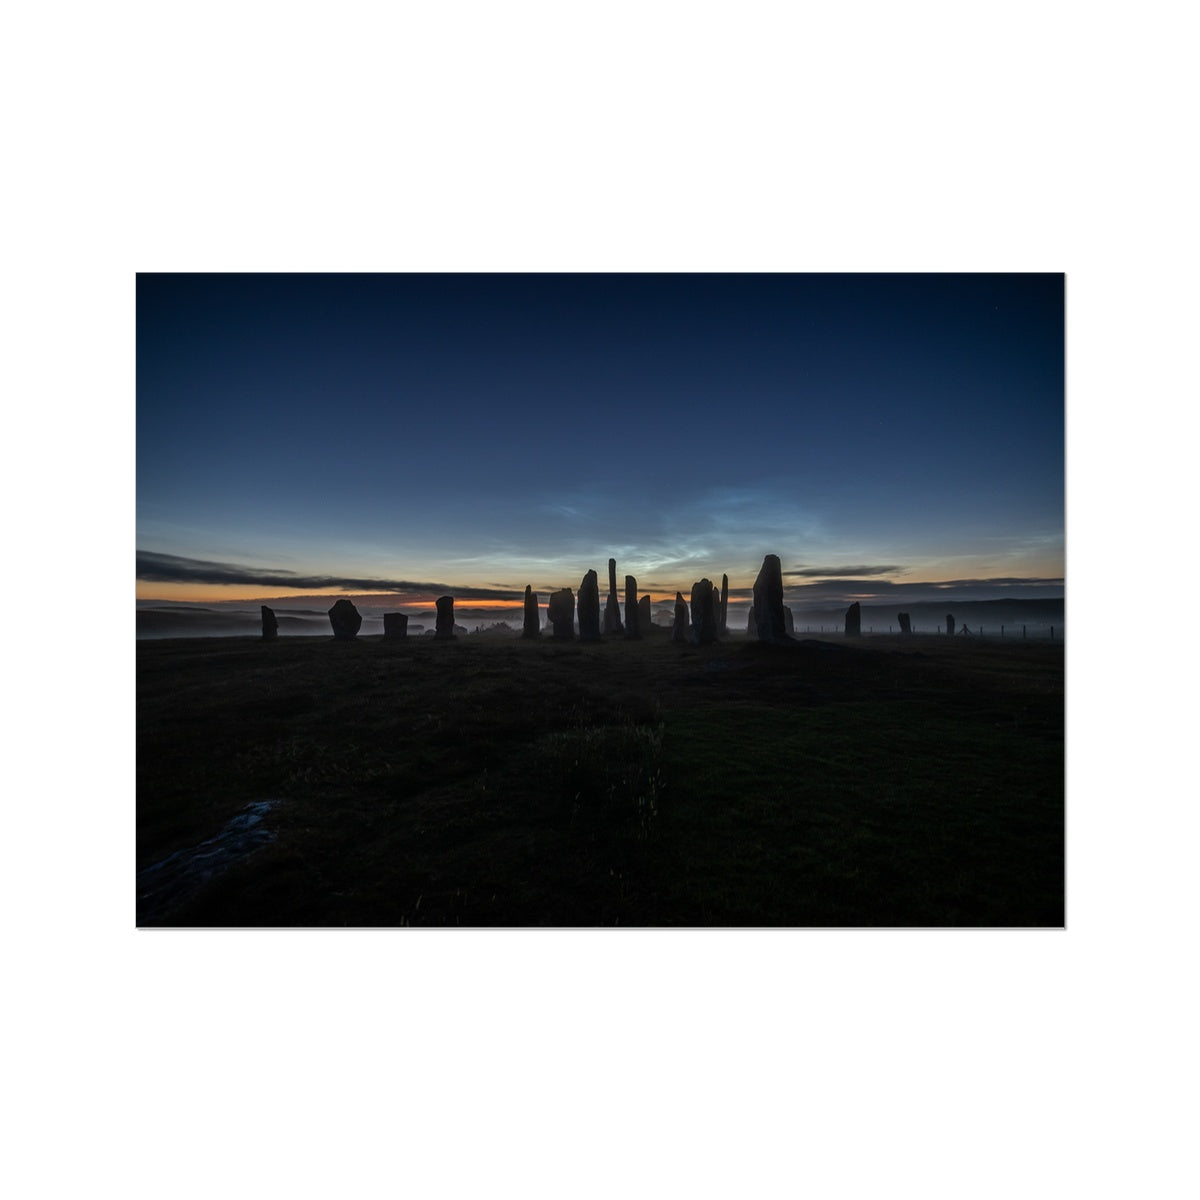 Callanish Stones and Noctilucent Clouds Photo Art Print